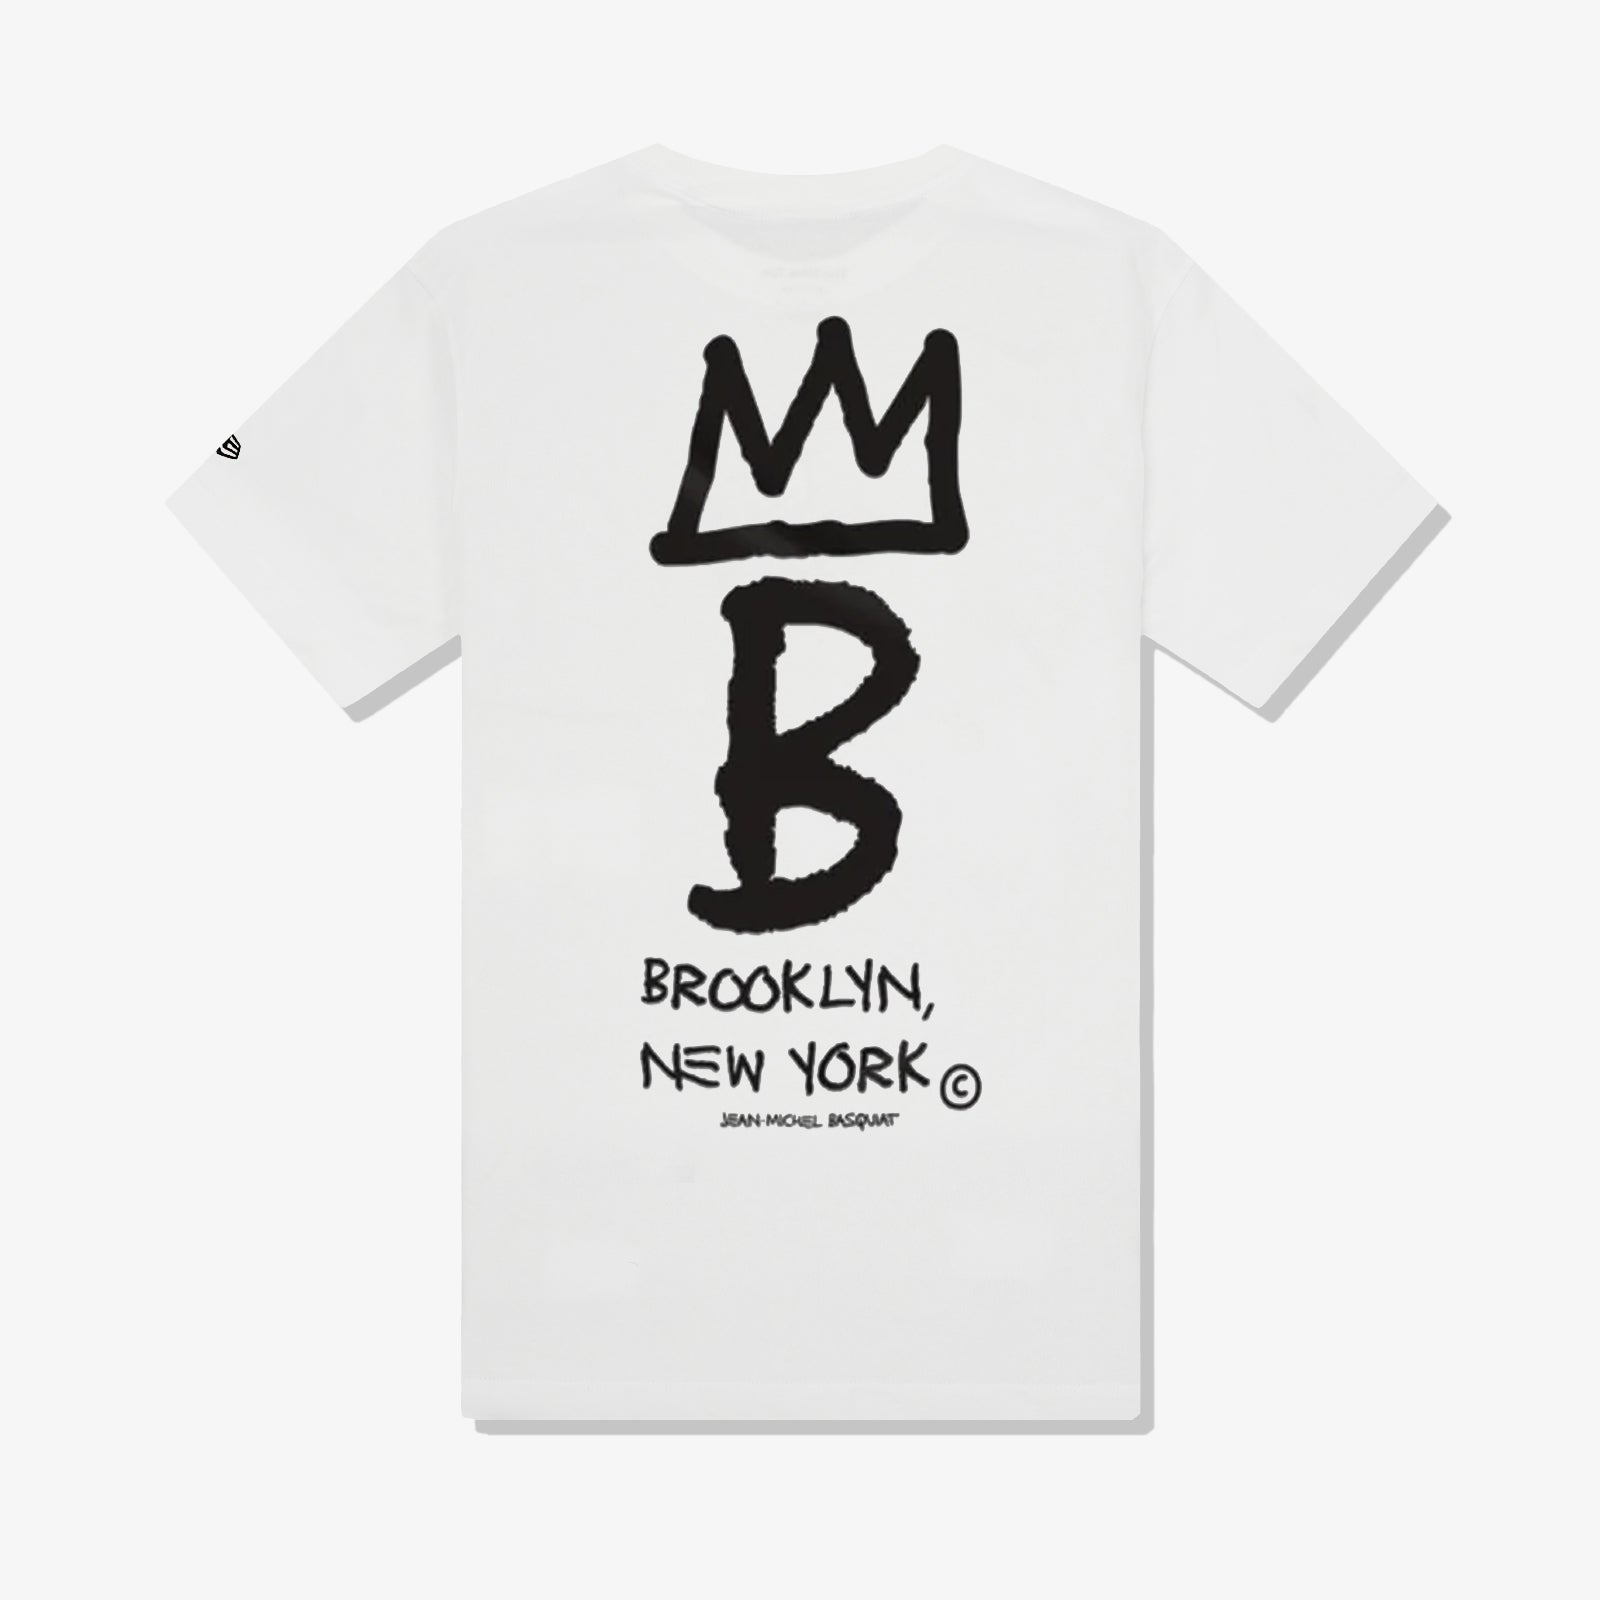 Brooklyn Nets City Edition Merchandise Unisex T-Shirt - Teeruto